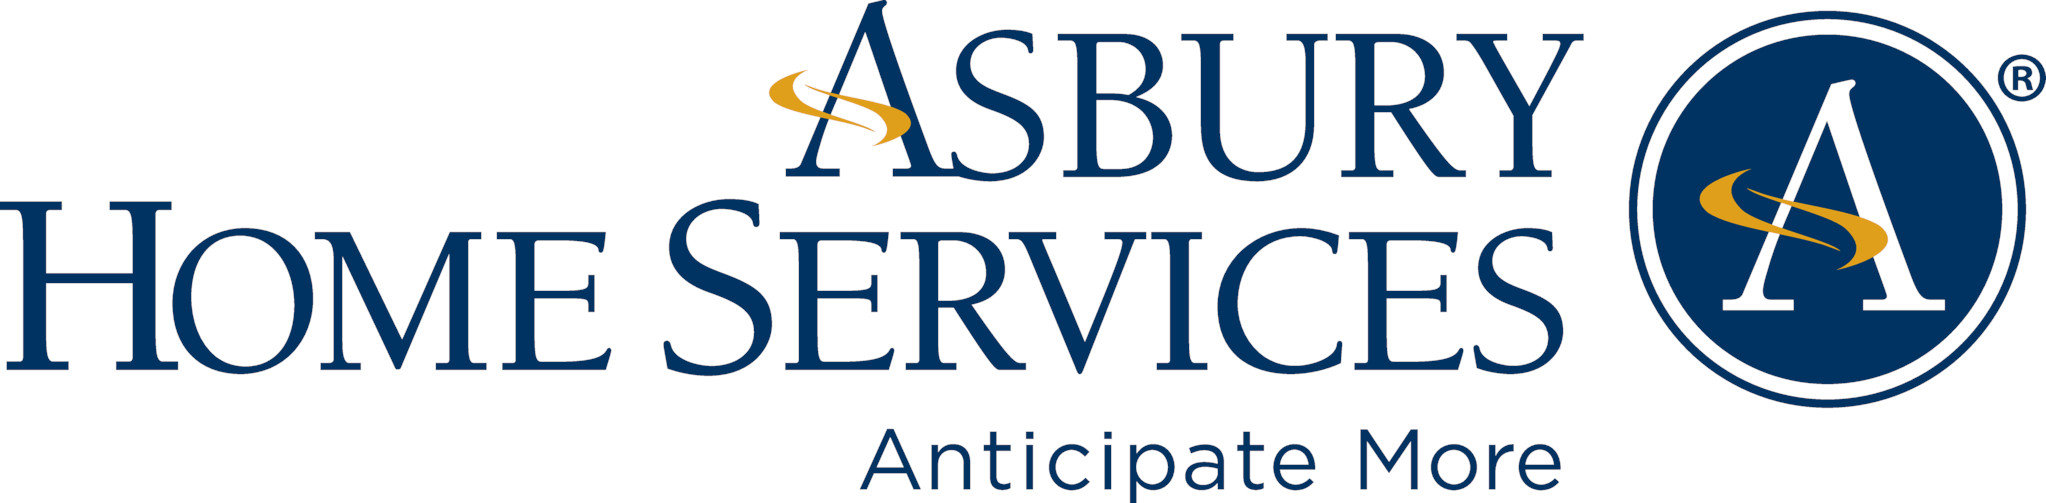 Asbury Home Services anticipate more